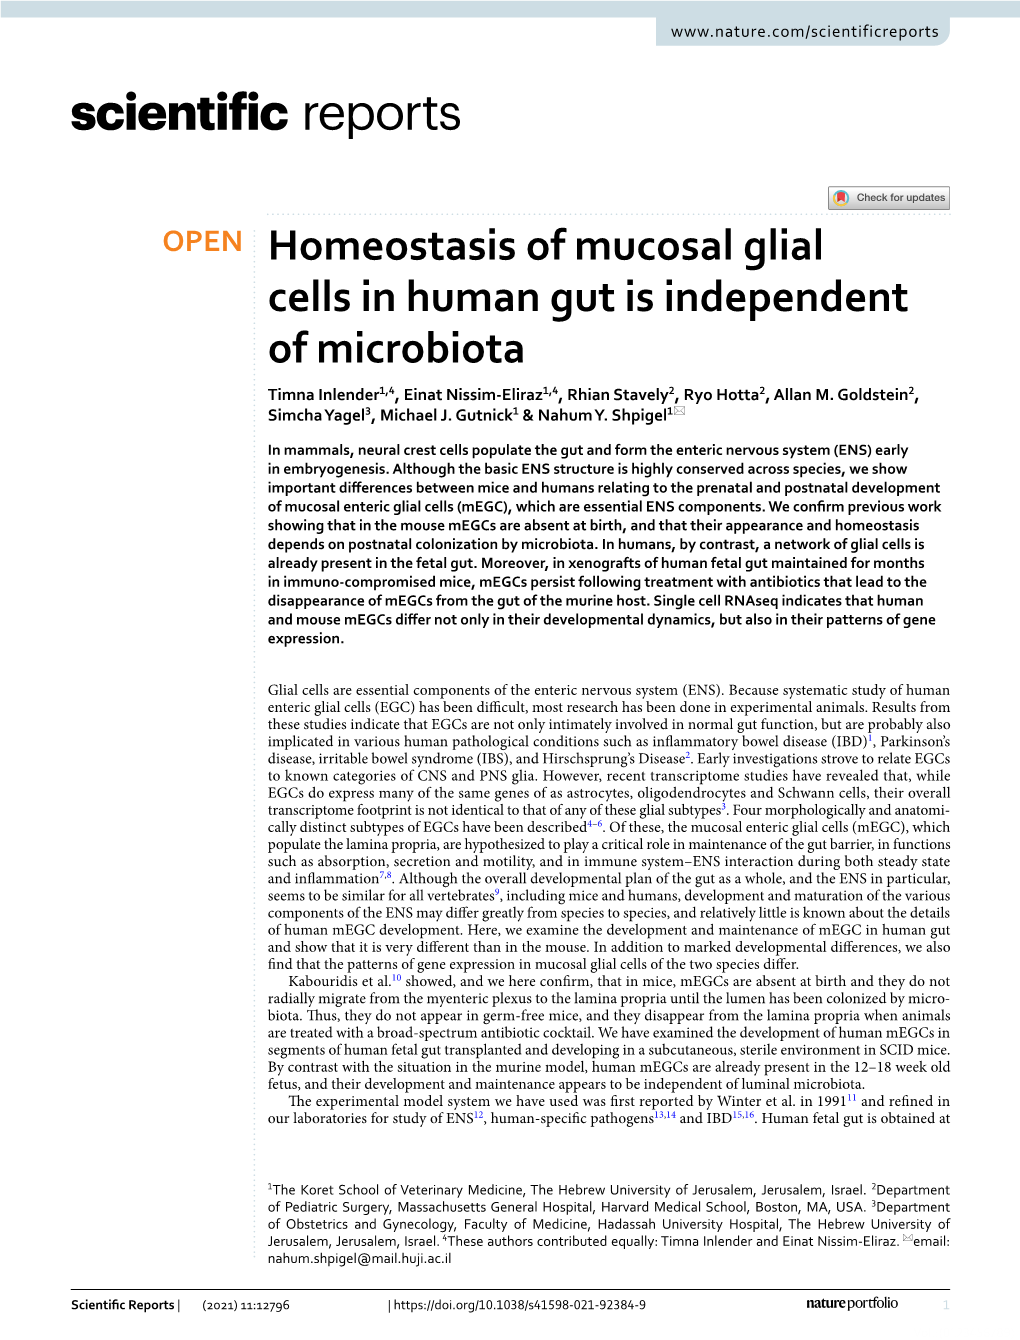 Homeostasis of Mucosal Glial Cells in Human Gut Is Independent of Microbiota Timna Inlender1,4, Einat Nissim‑Eliraz1,4, Rhian Stavely2, Ryo Hotta2, Allan M